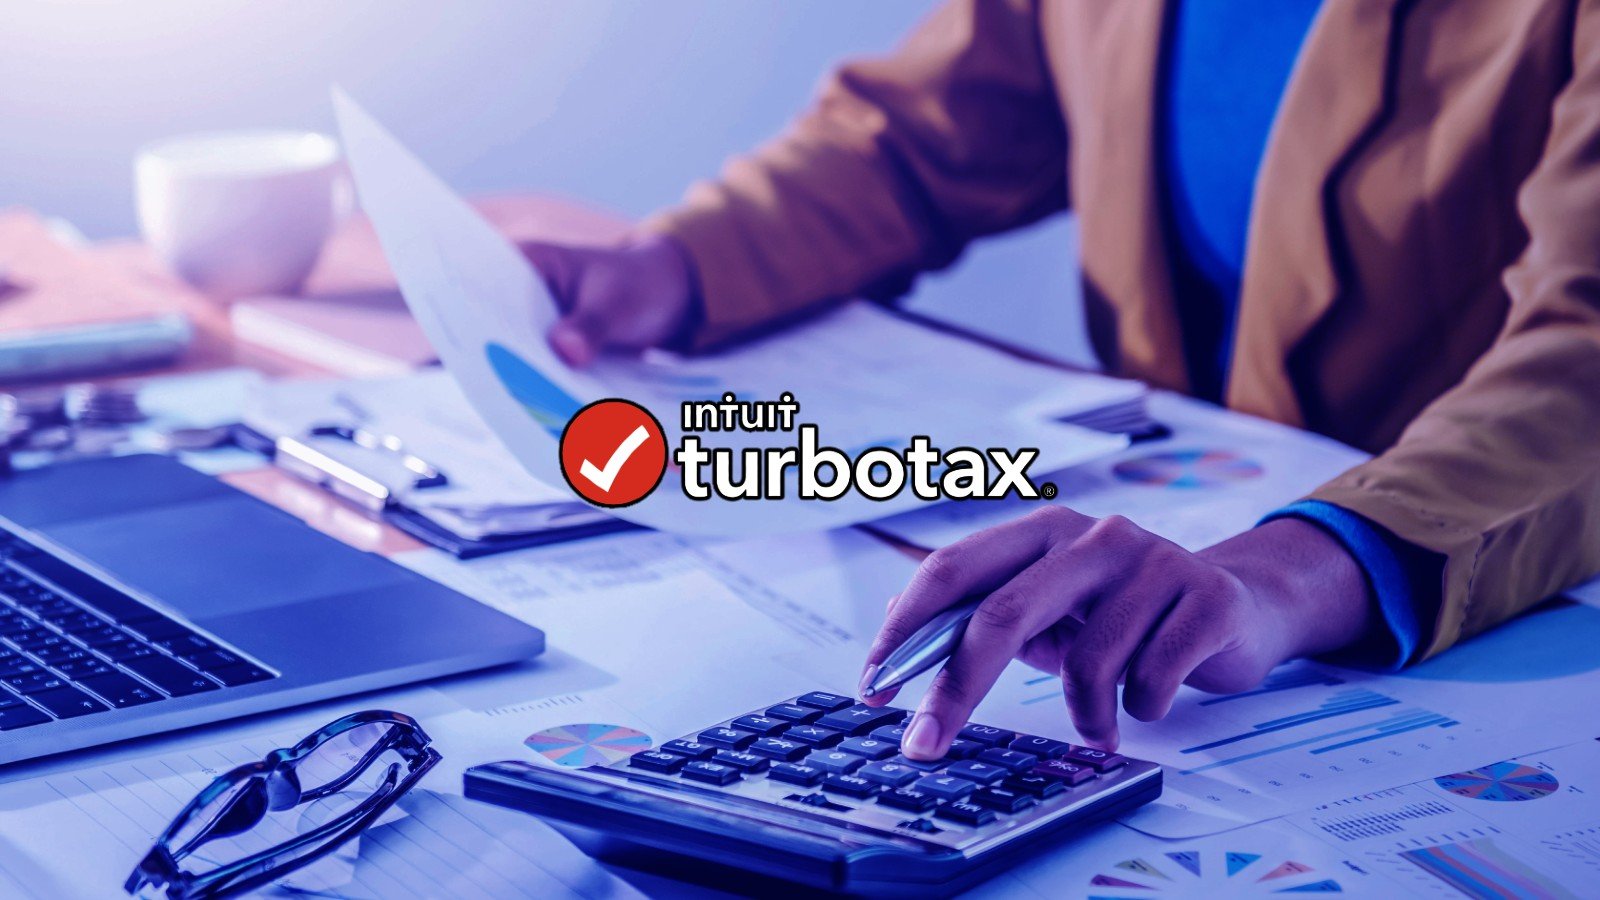 Intuit notifies customers of hacked TurboTax accounts